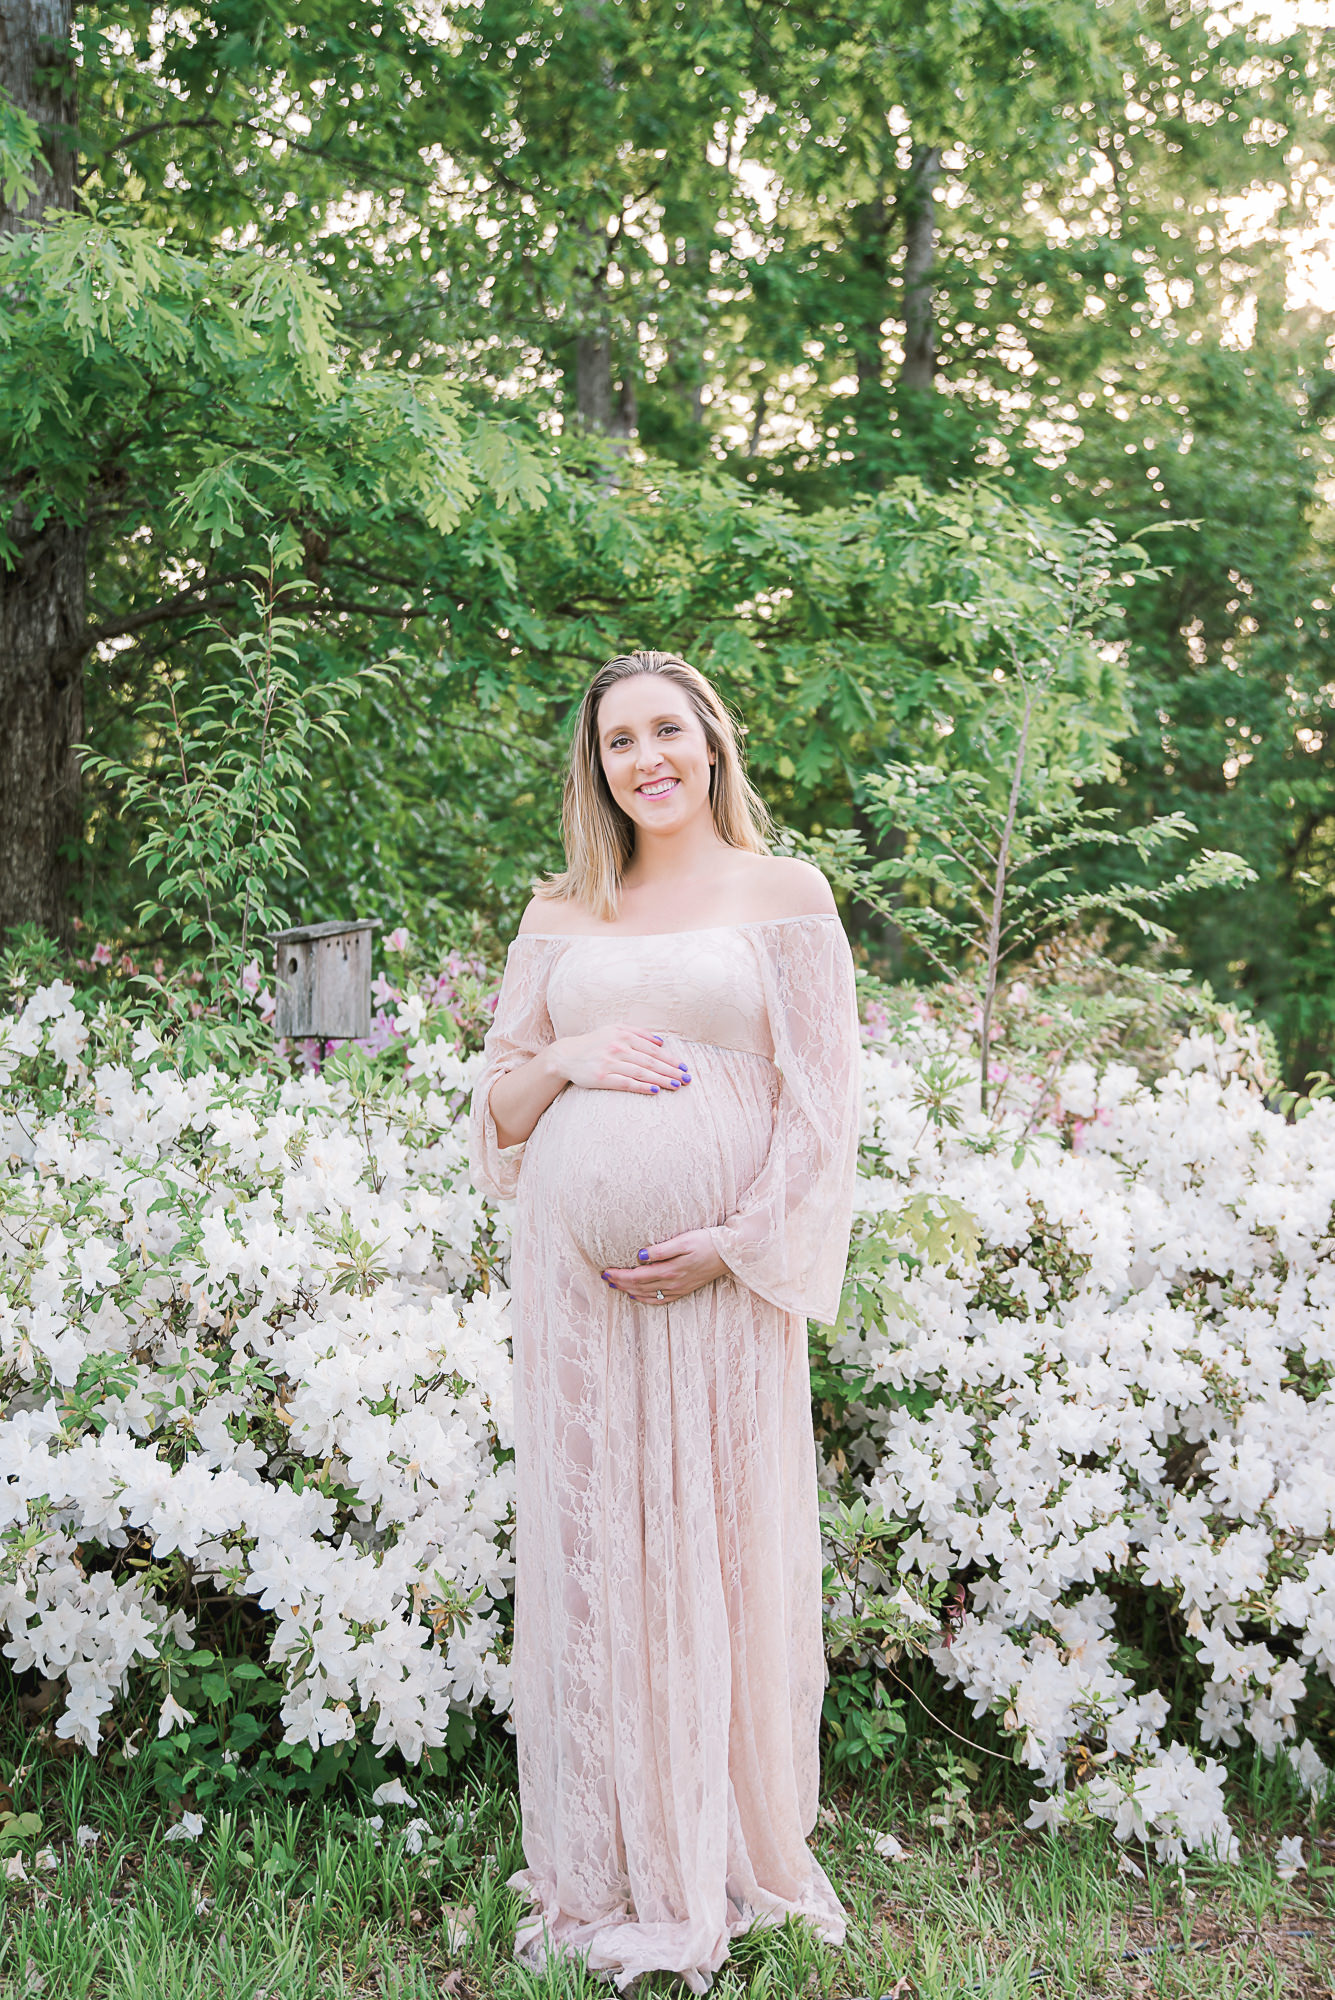 Amber | Denver NC Maternity Photographer | Anna Wisjo Photography